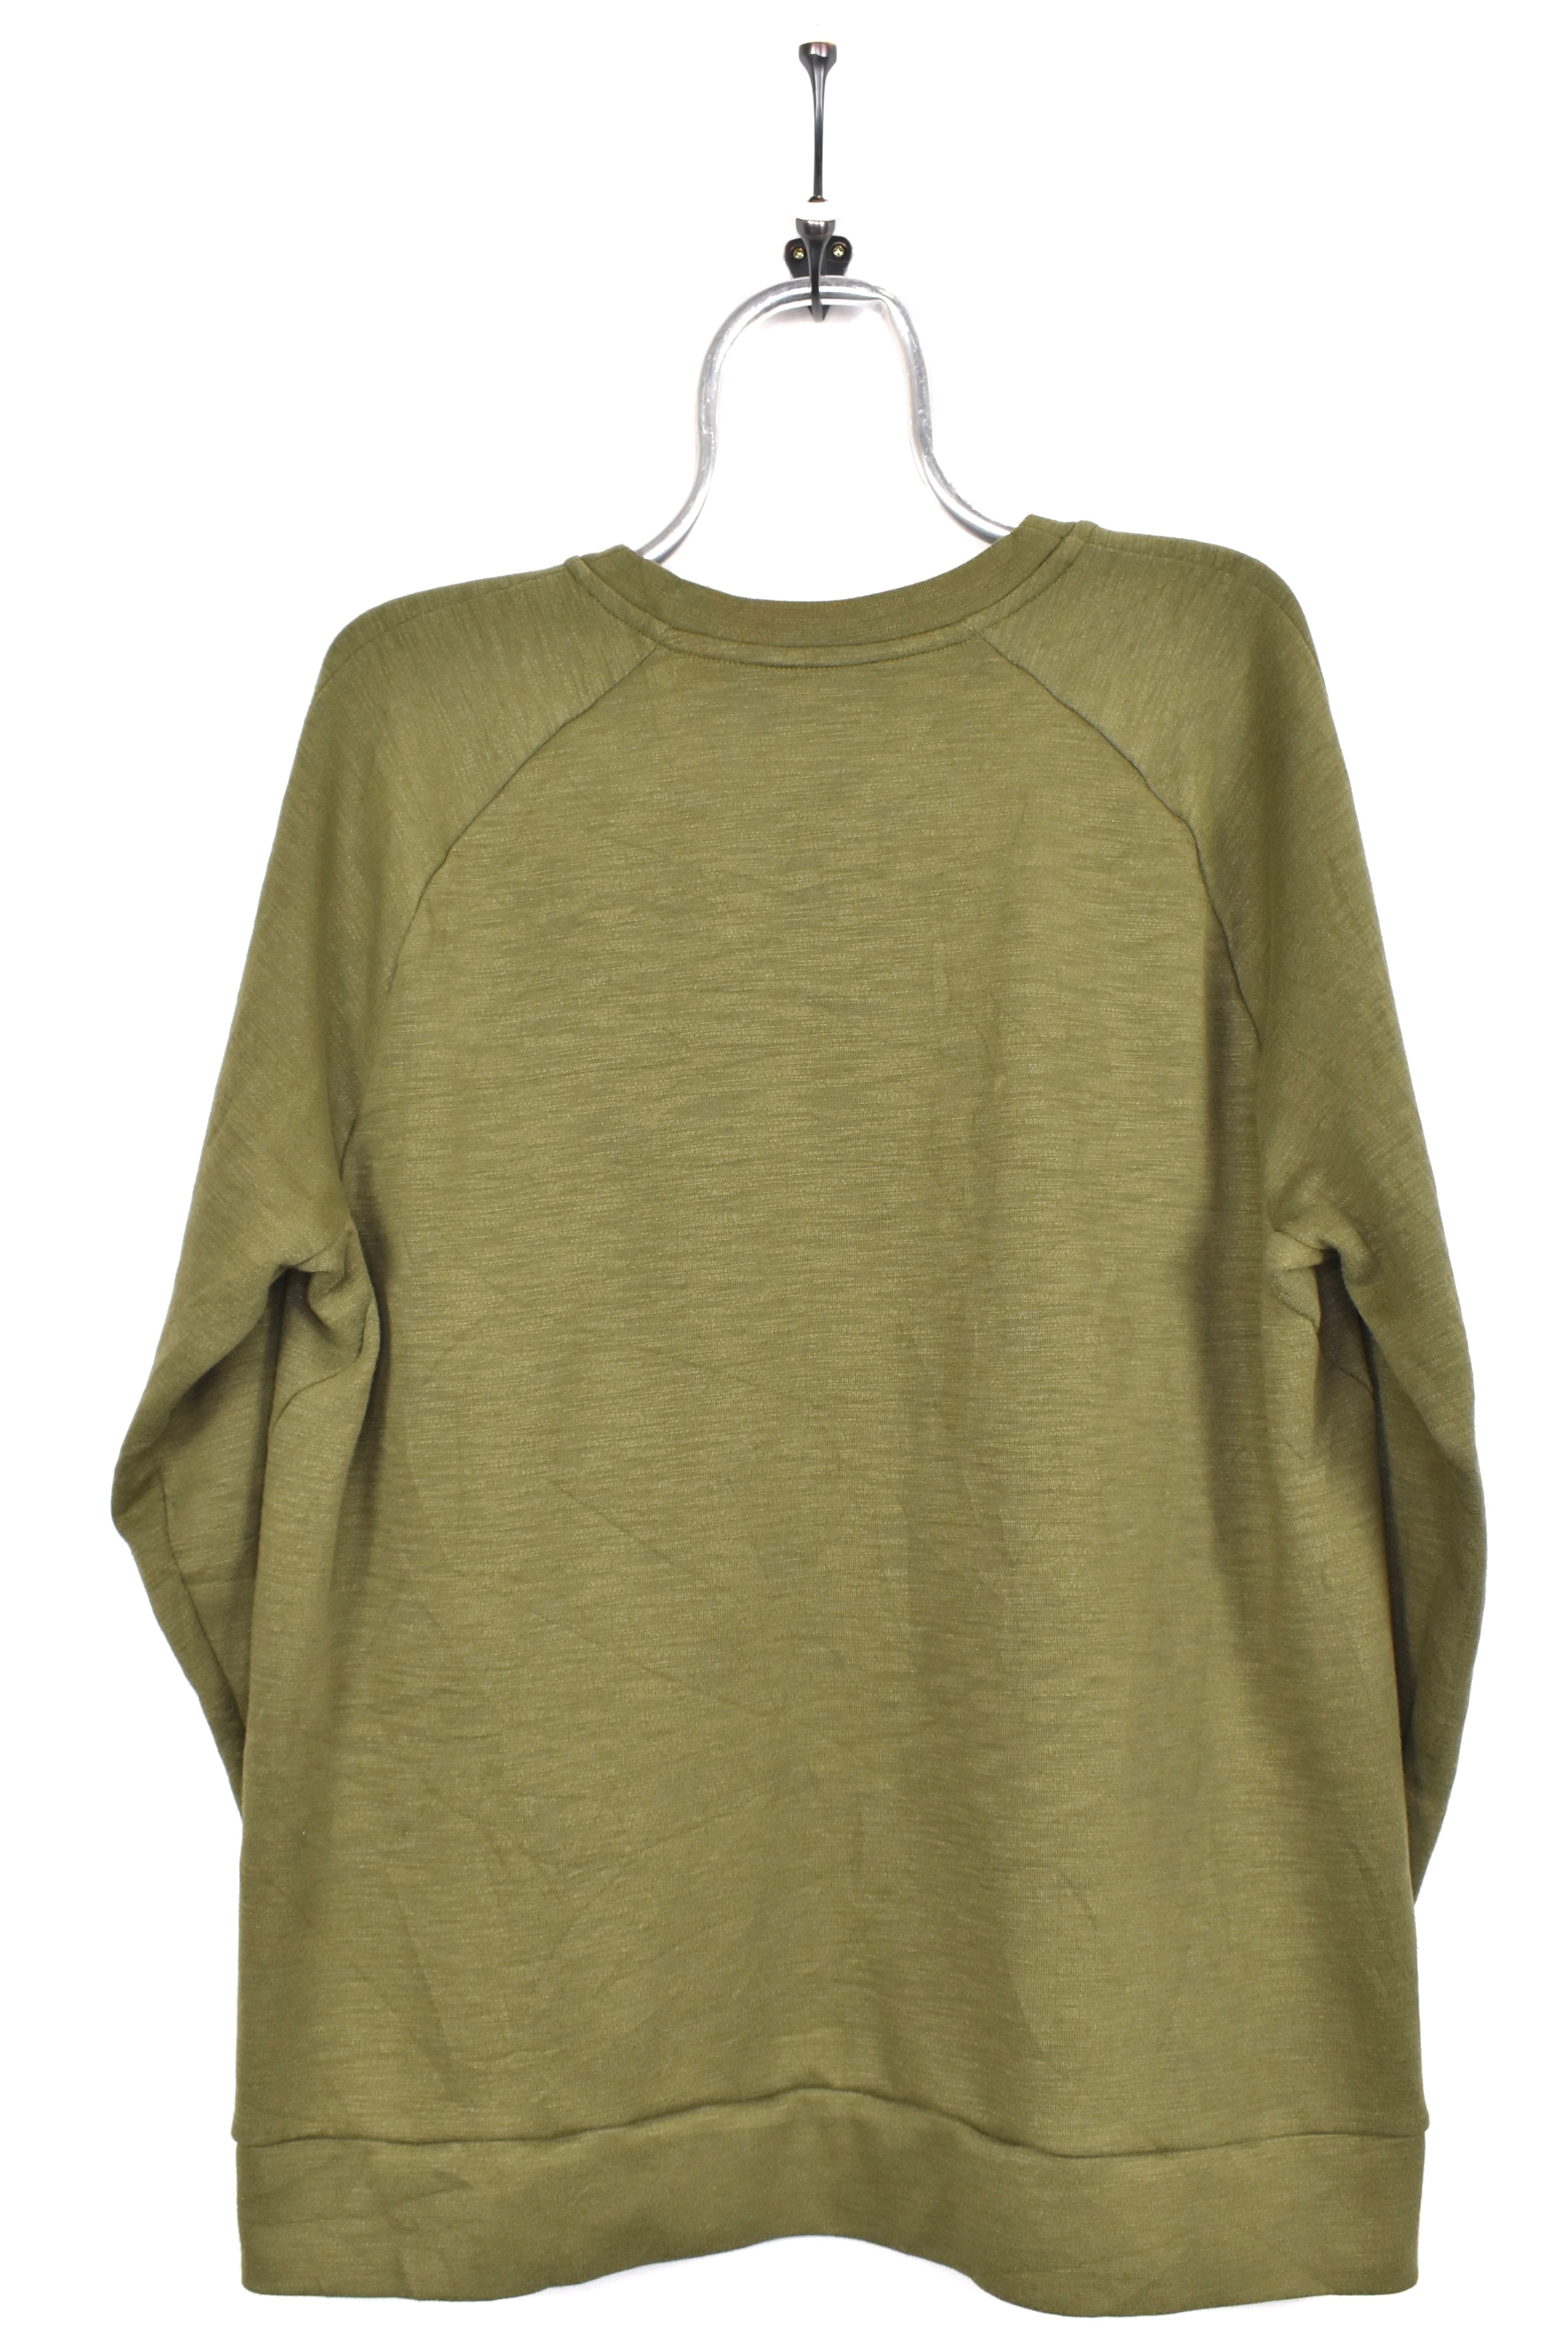 Vintage Nike sweatshirt, green long sleeve crewneck - AU L NIKE